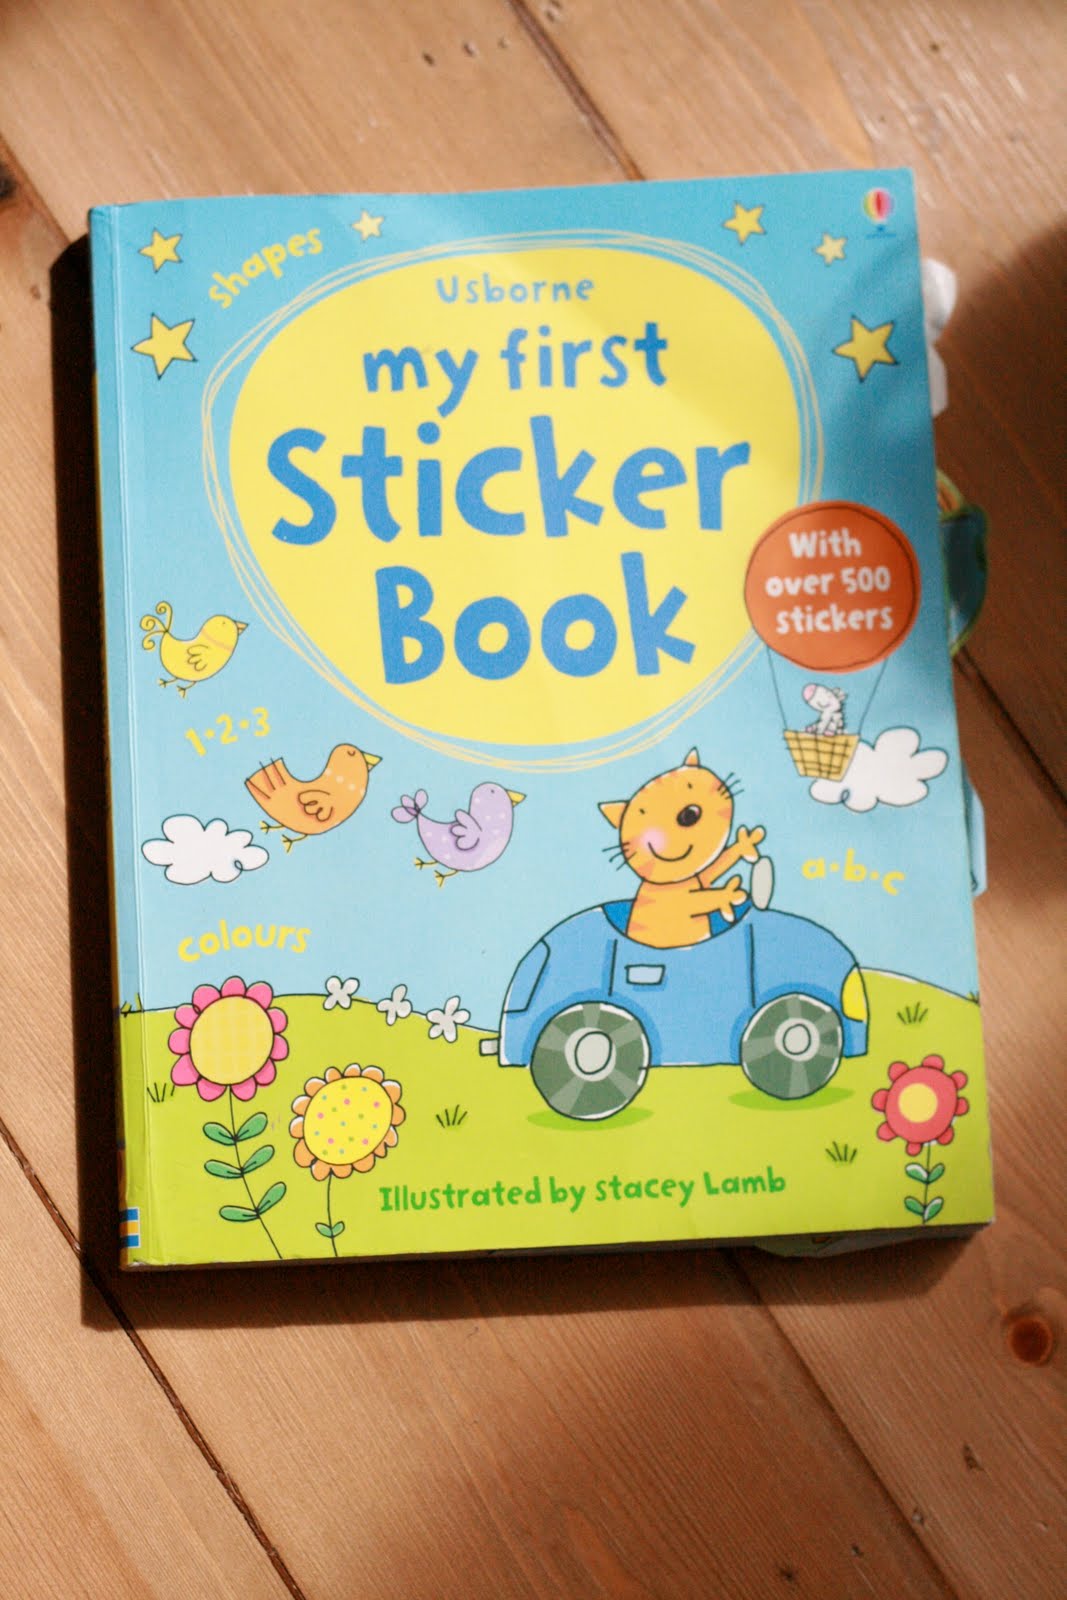 260 Stickers Fairies Sticker & Colour Activity Fun Book 4 Books to Collect 